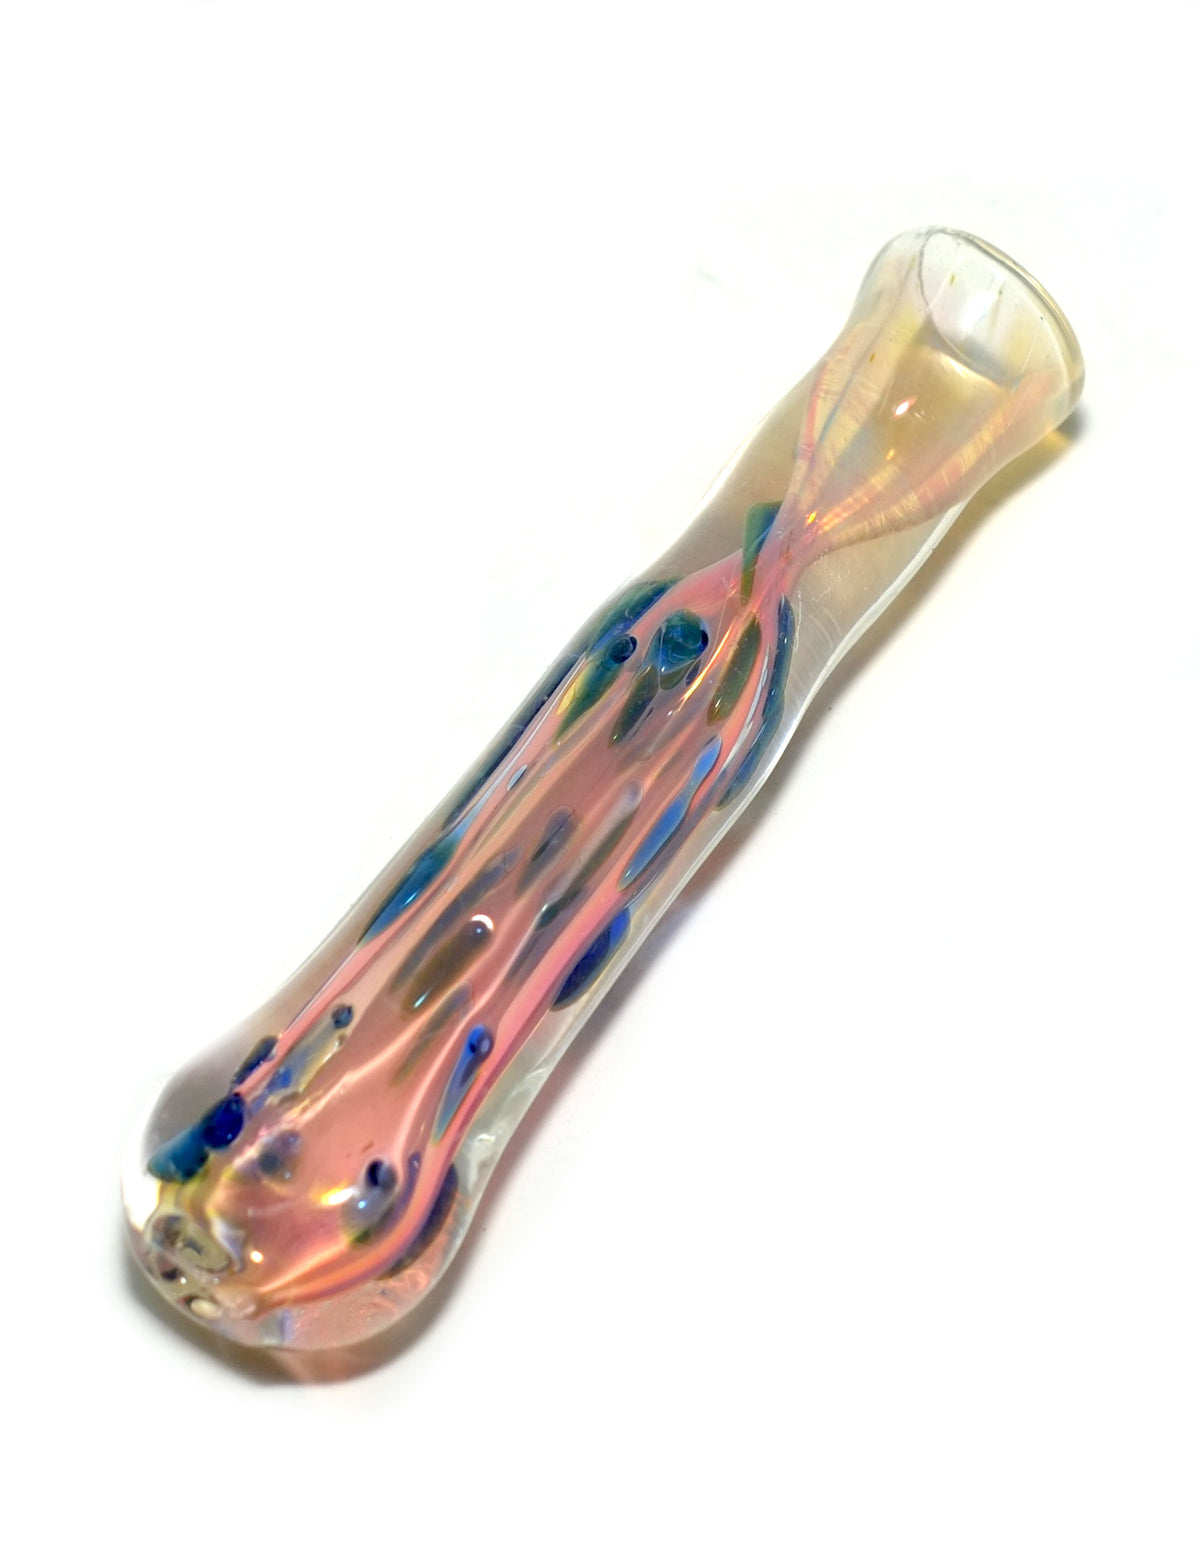 3.5" Thick Glass Chillum Pipe